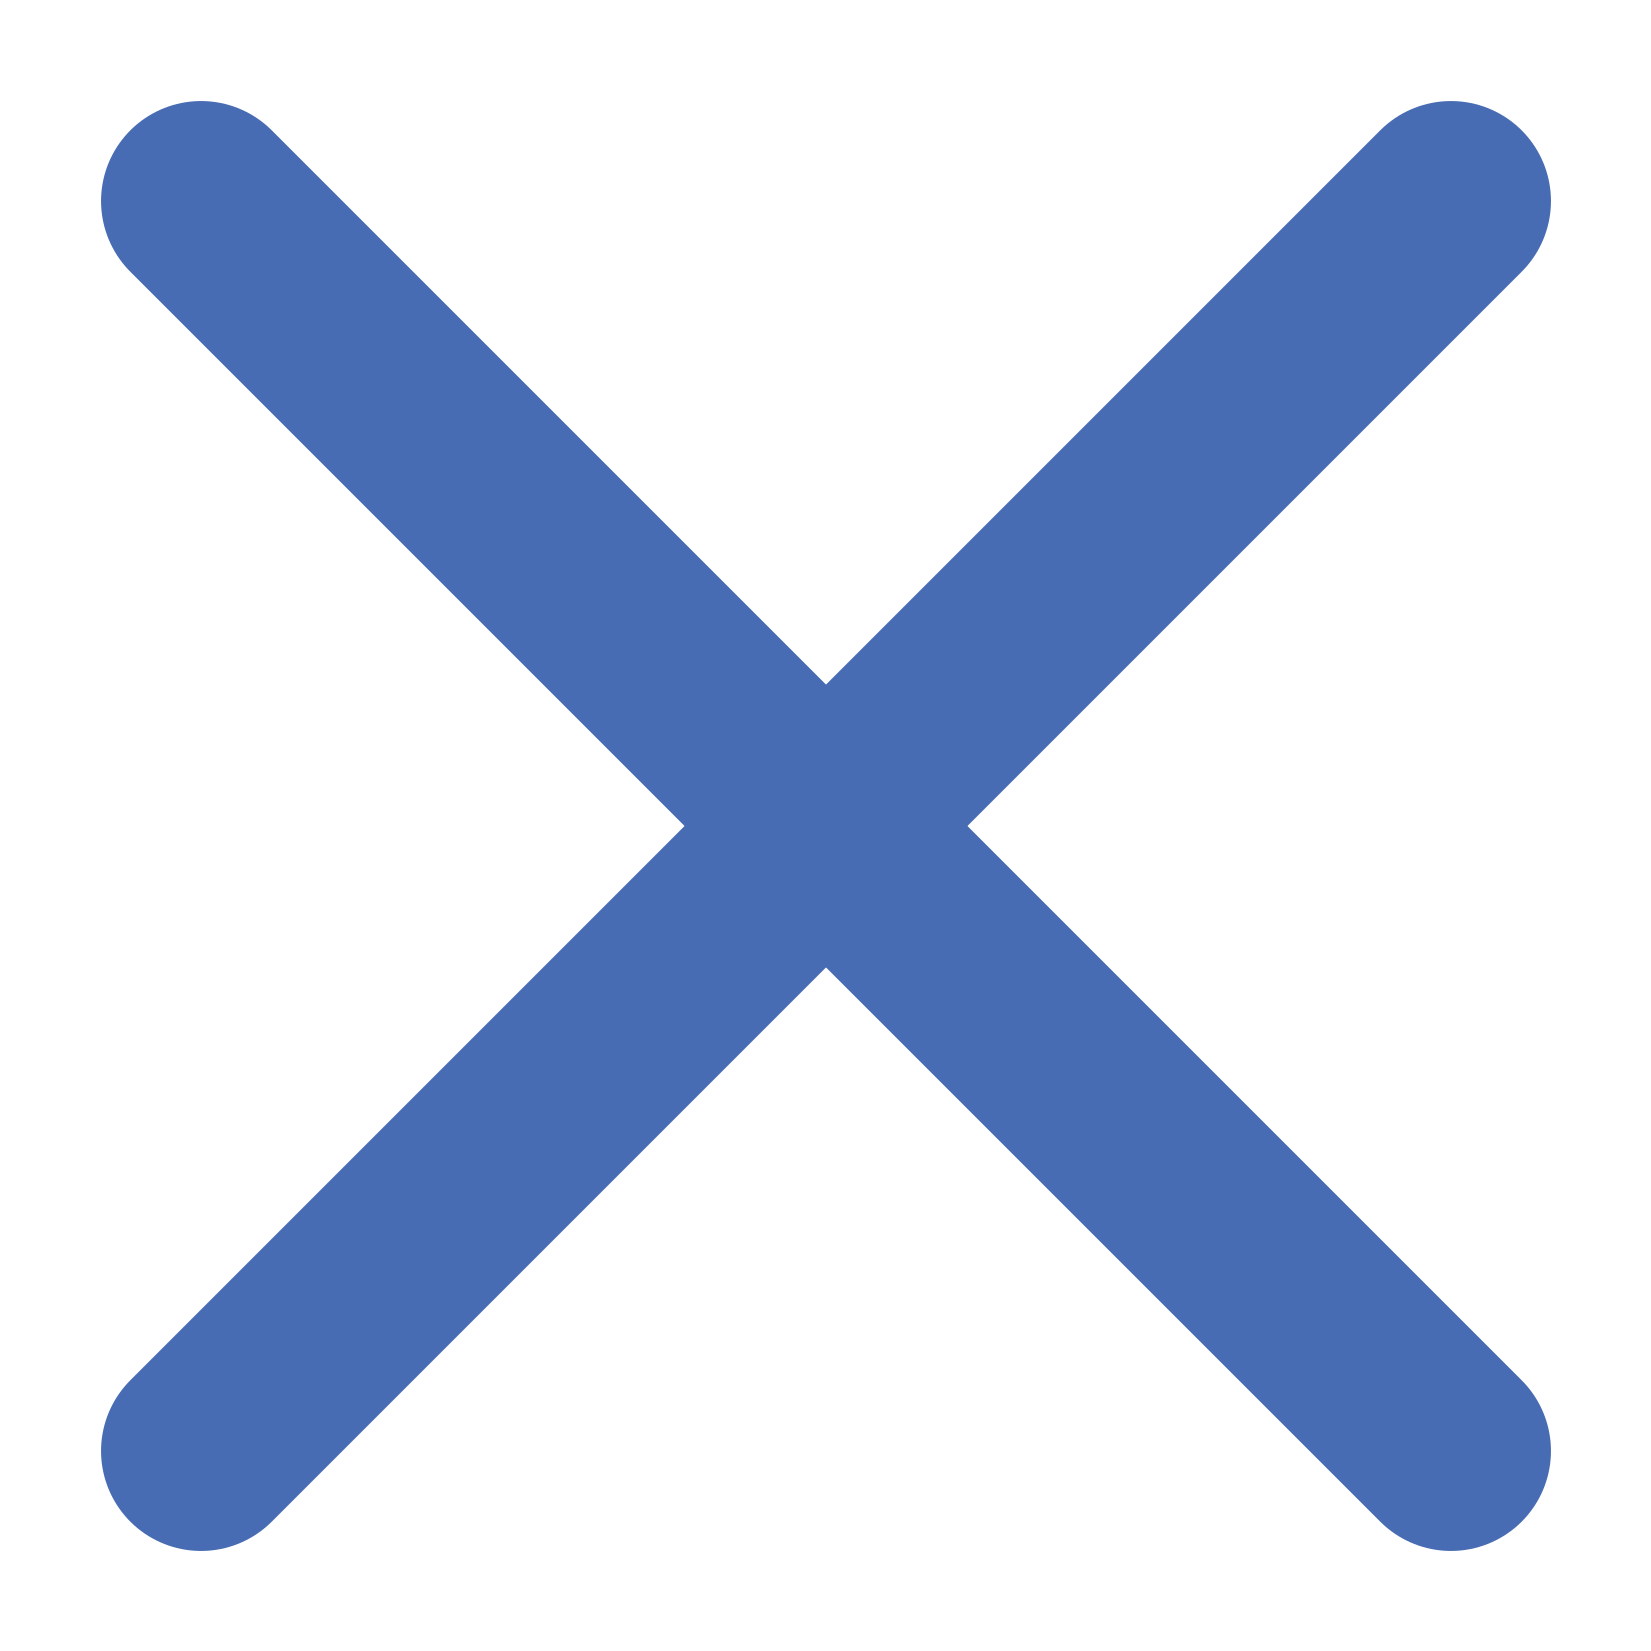 Image x icon. Черный крестик. Крестик в квадрате. Символ x. Квадрат символ.